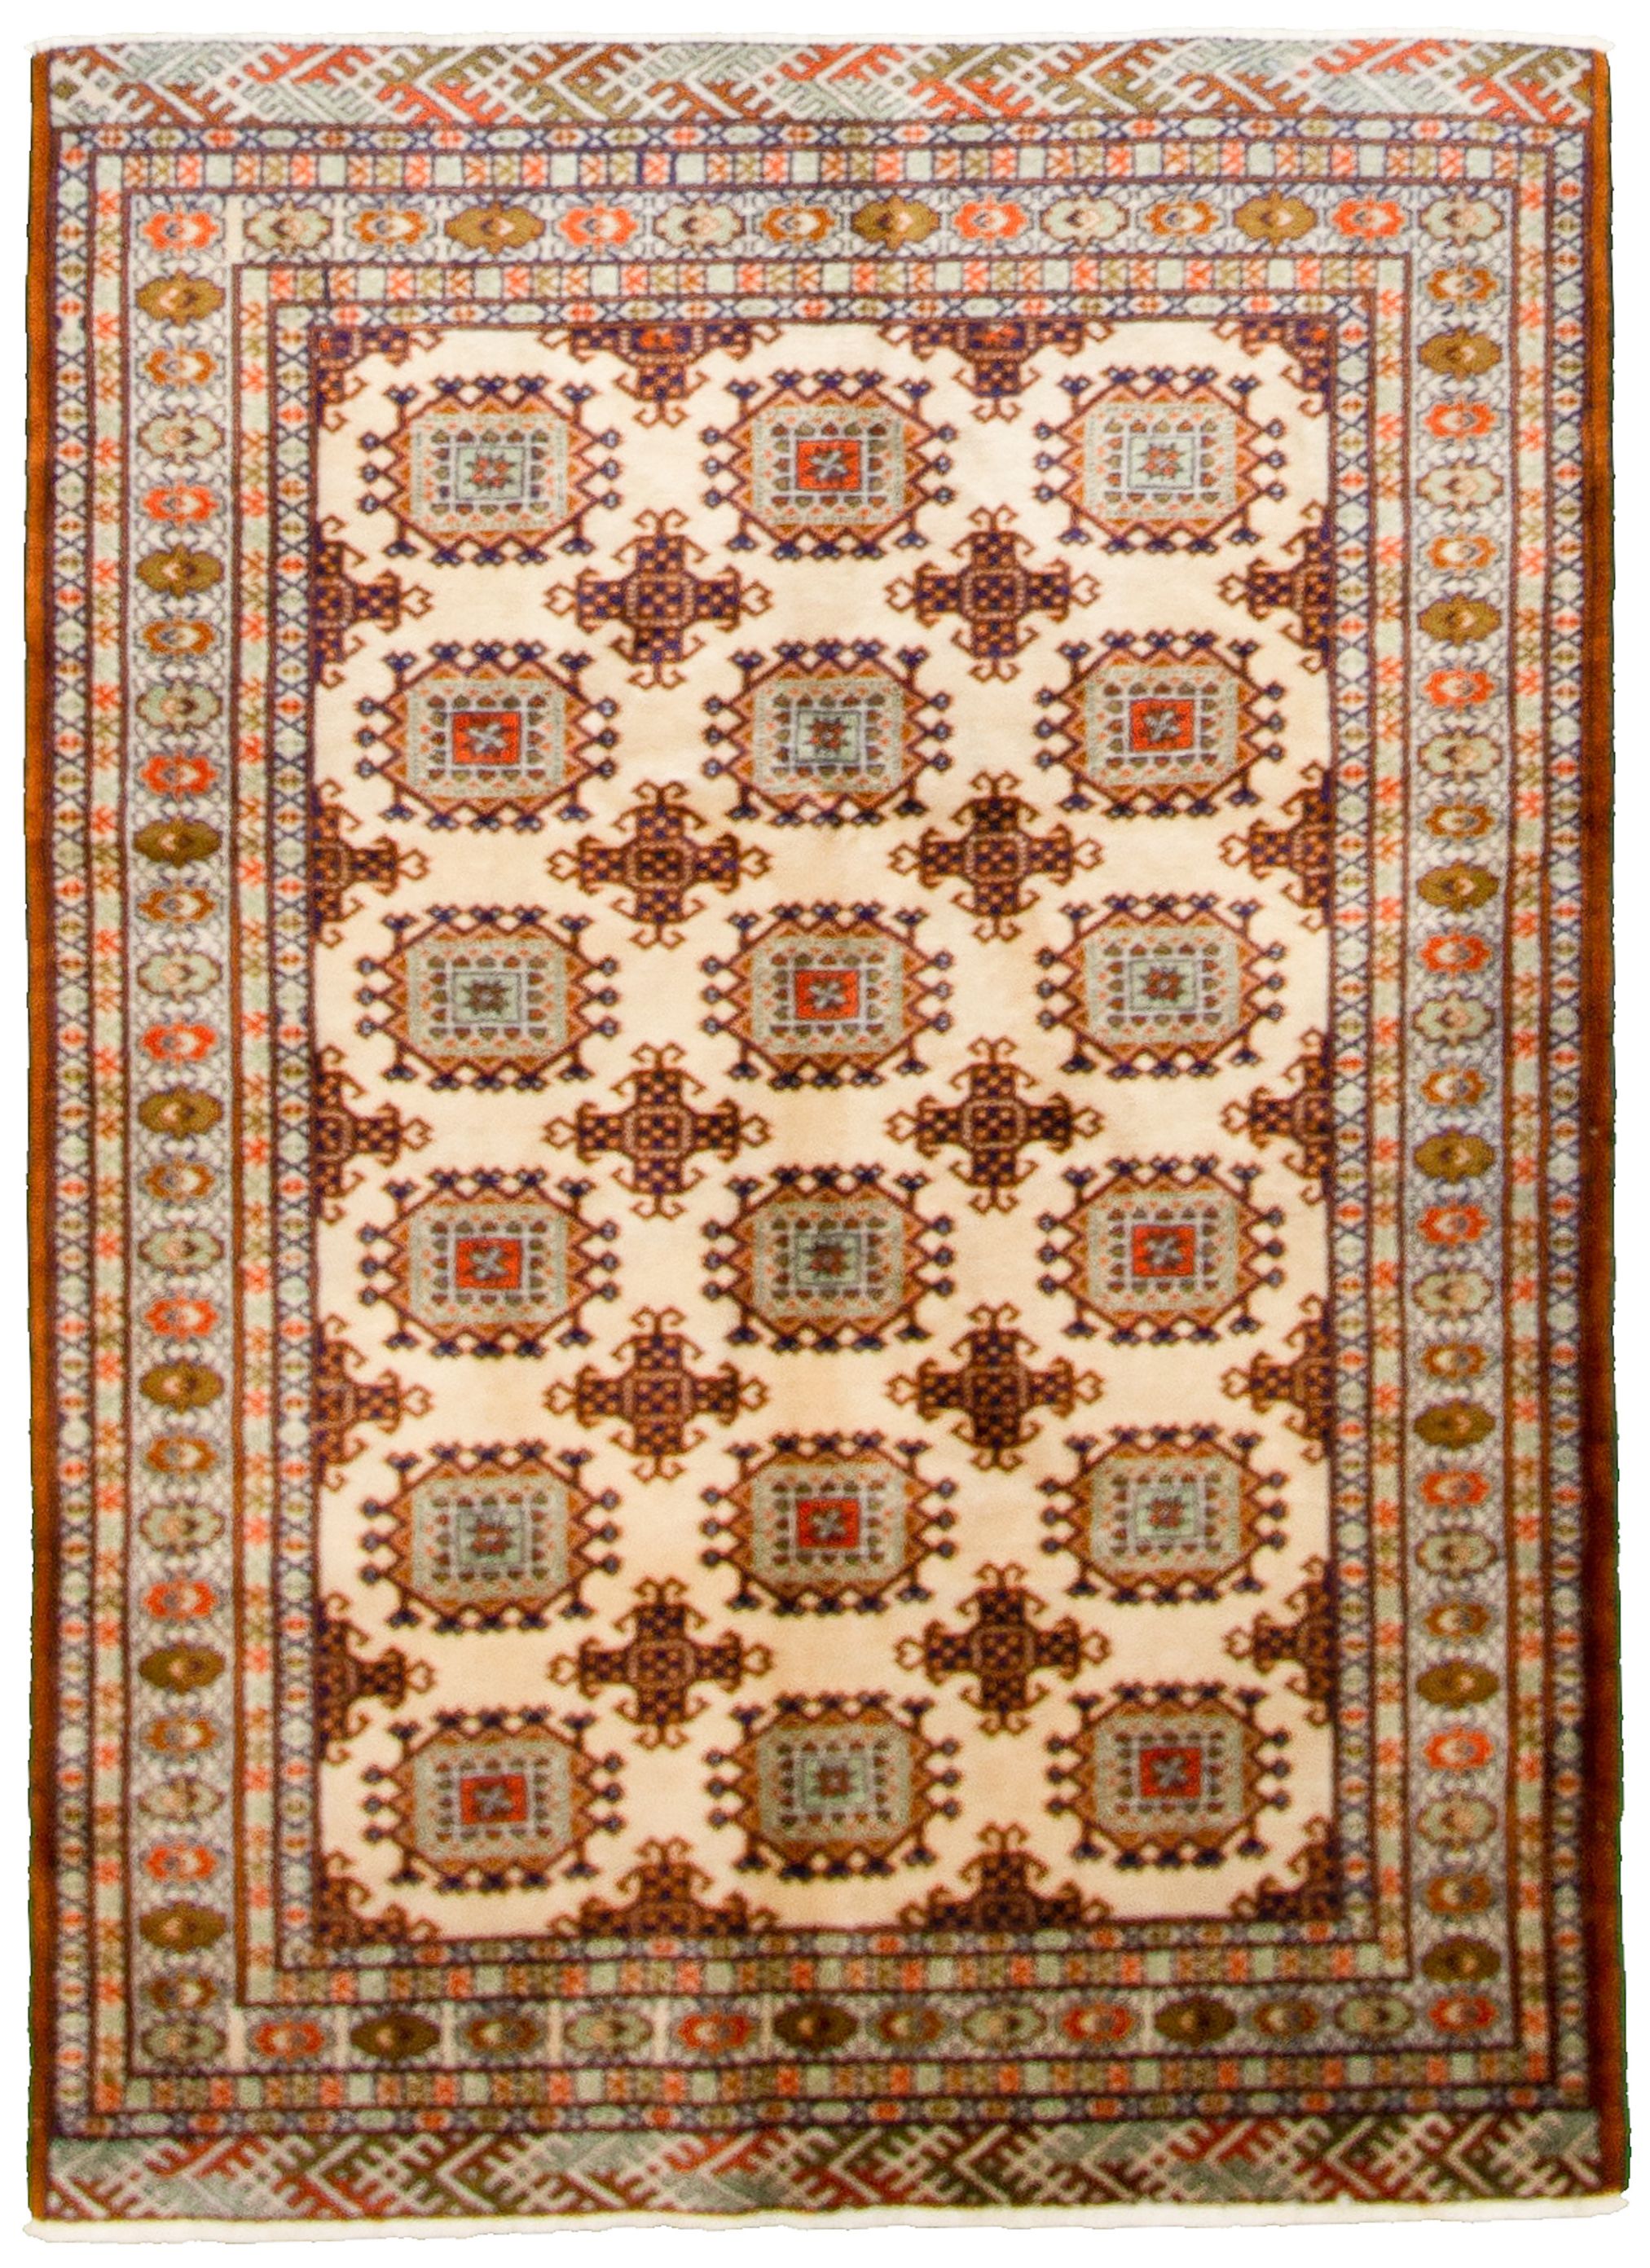 Hand-knotted Turkoman  Wool Rug 4'3" x 5'10"  Size: 4'3" x 5'10"  